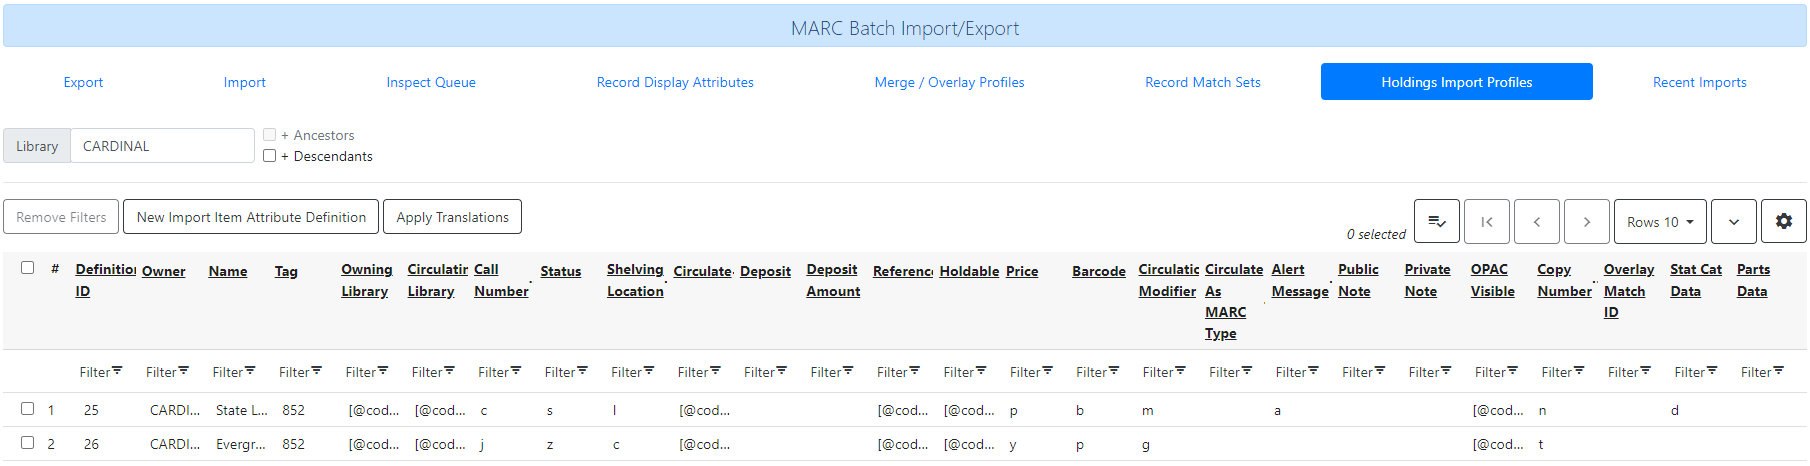 "Holdings Import Profiles" window